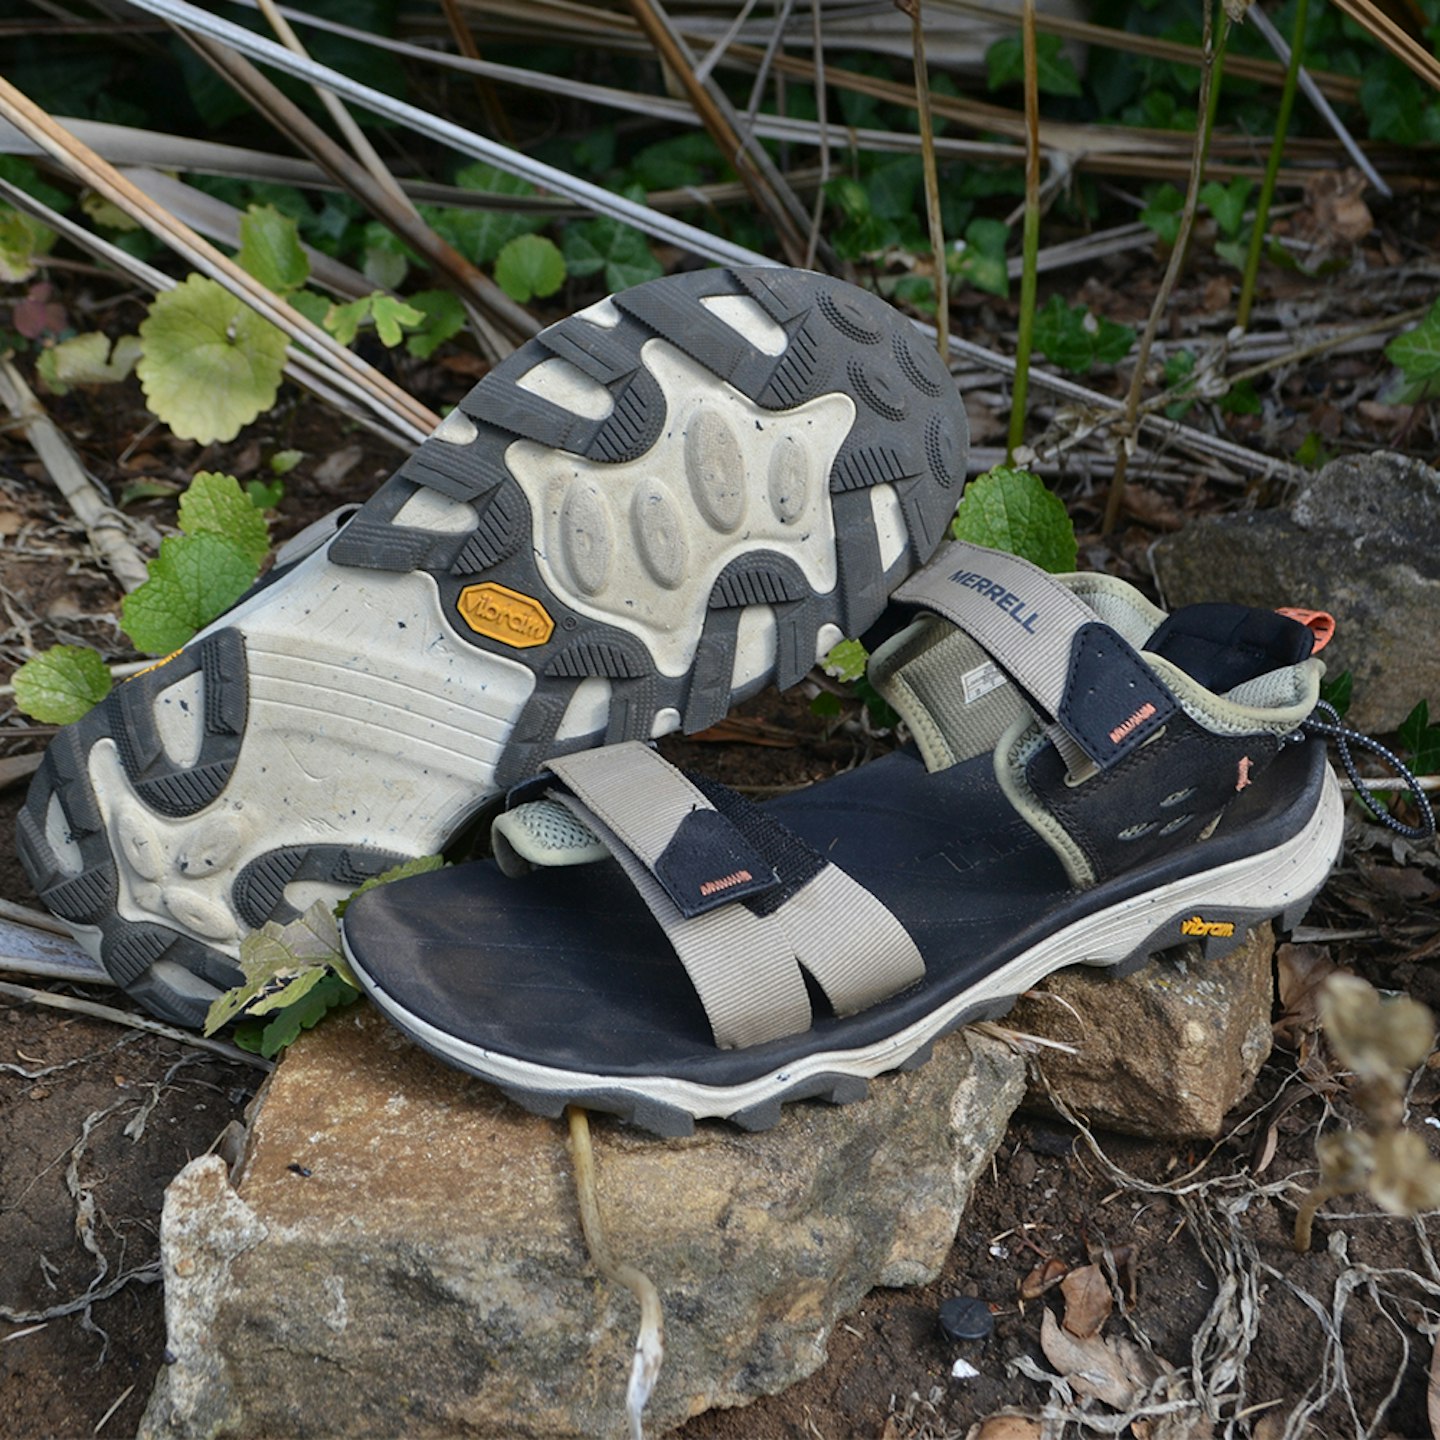 Merrel speed fusion strap best walking sandals reviewed